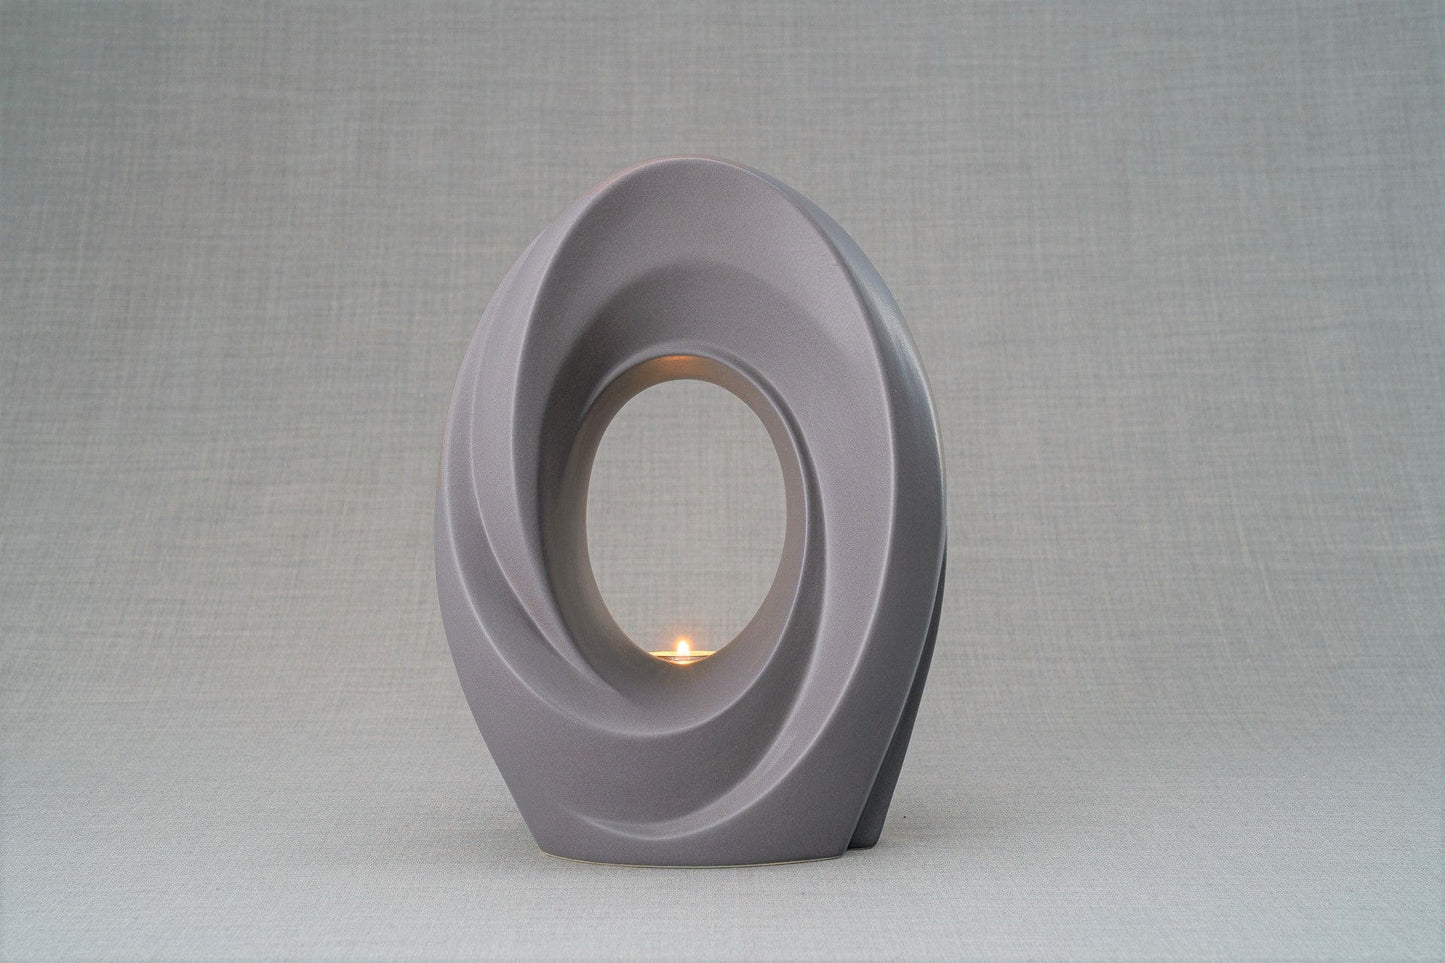 Pulvis Art Urns Adult Size Urn Handmade Cremation Urn for Ashes "The Passage" - Large | Gray Matte | Ceramic